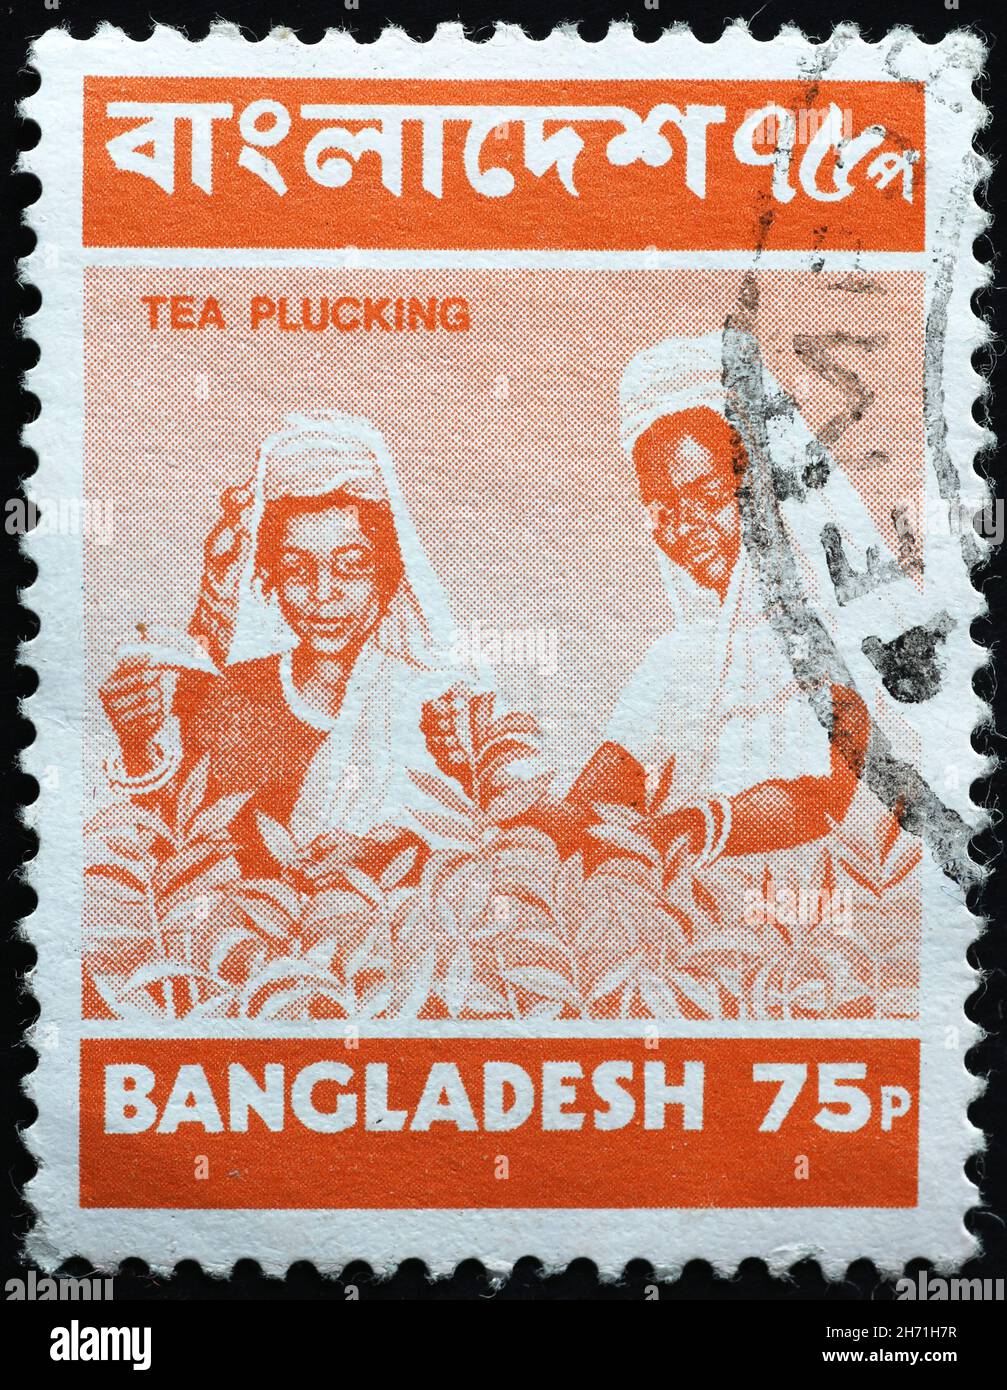 Women plucking tea leaves on stamp of Bangladesh Stock Photo